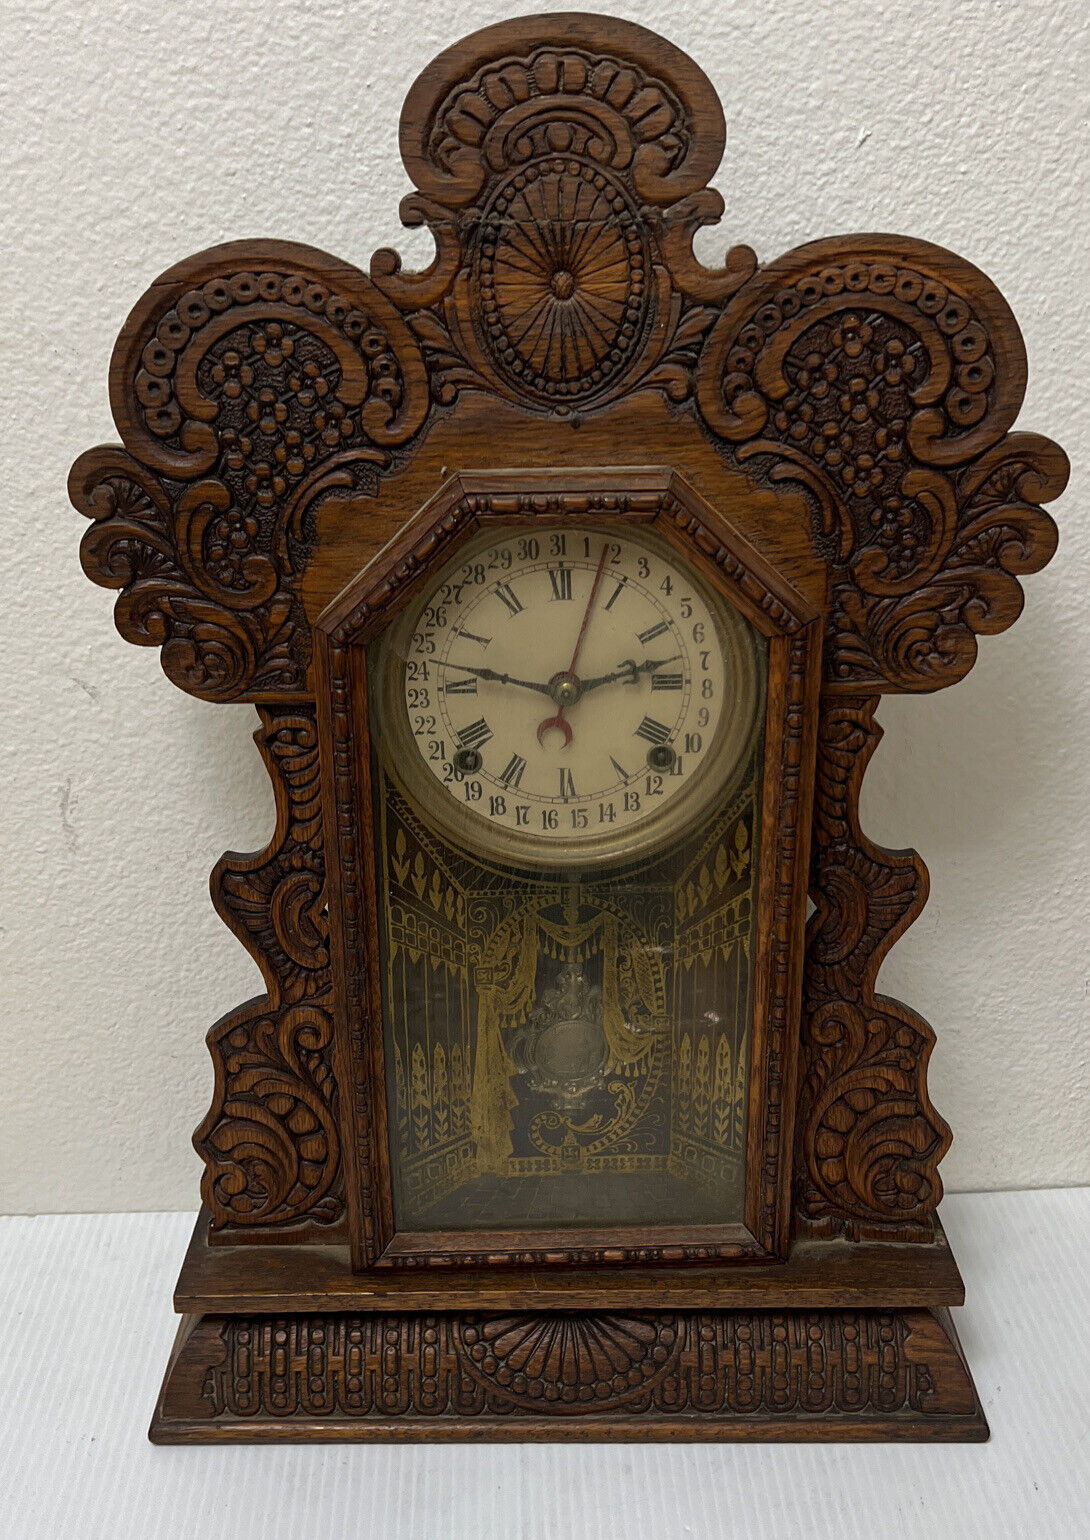 Ingraham Gila Model Parlor Mantle Clock, 8 Day T&S, Calendar, Oak Case, Running